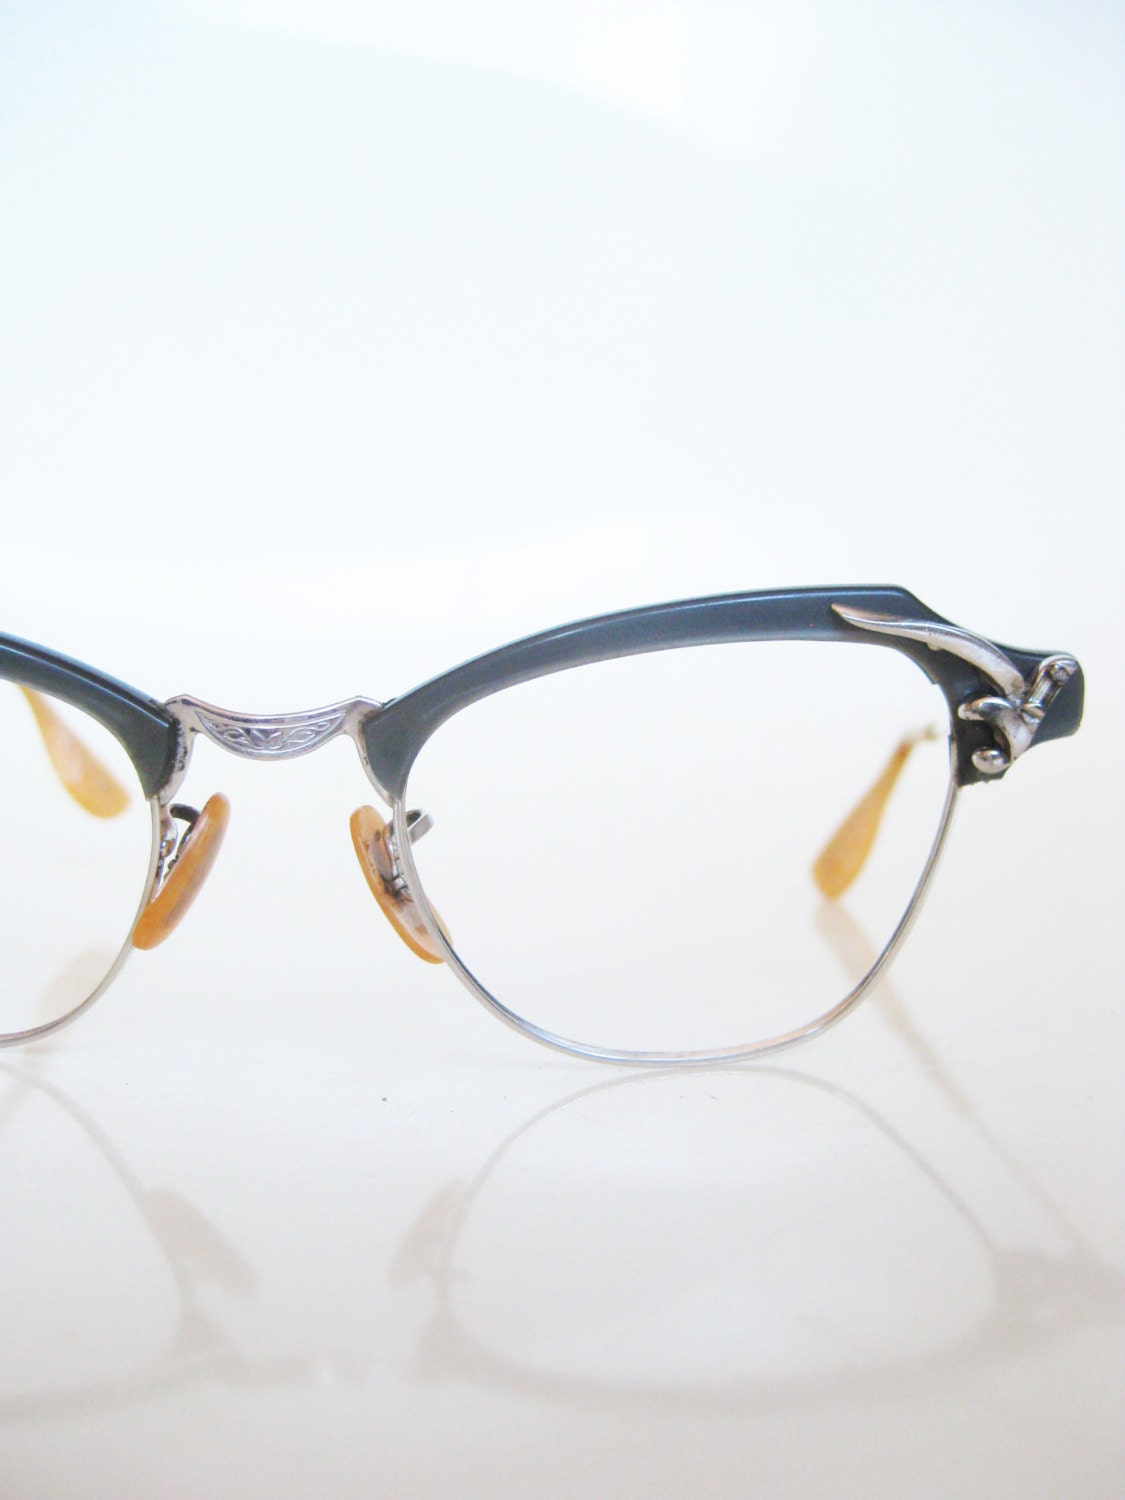 Cat Eye Eyeglasses Vintage 1950s Glasses Dark Dusty Blue 